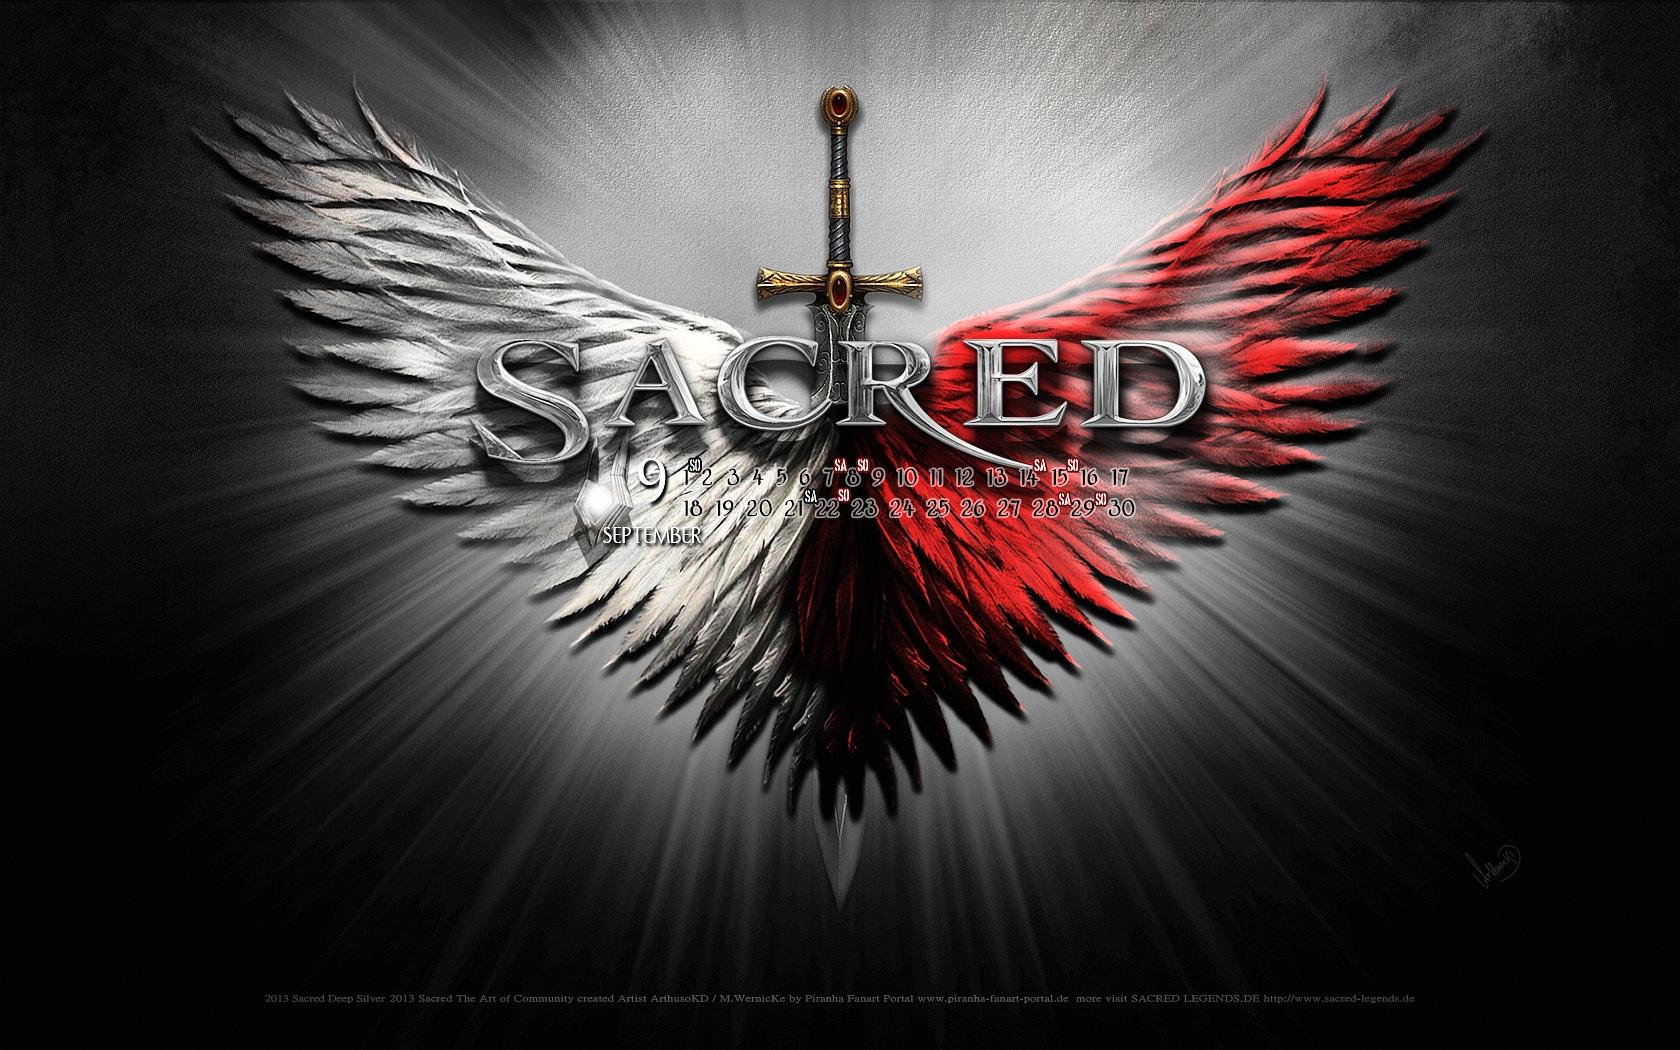 sacred_citadel_calendar_september2013_2_1680x1050